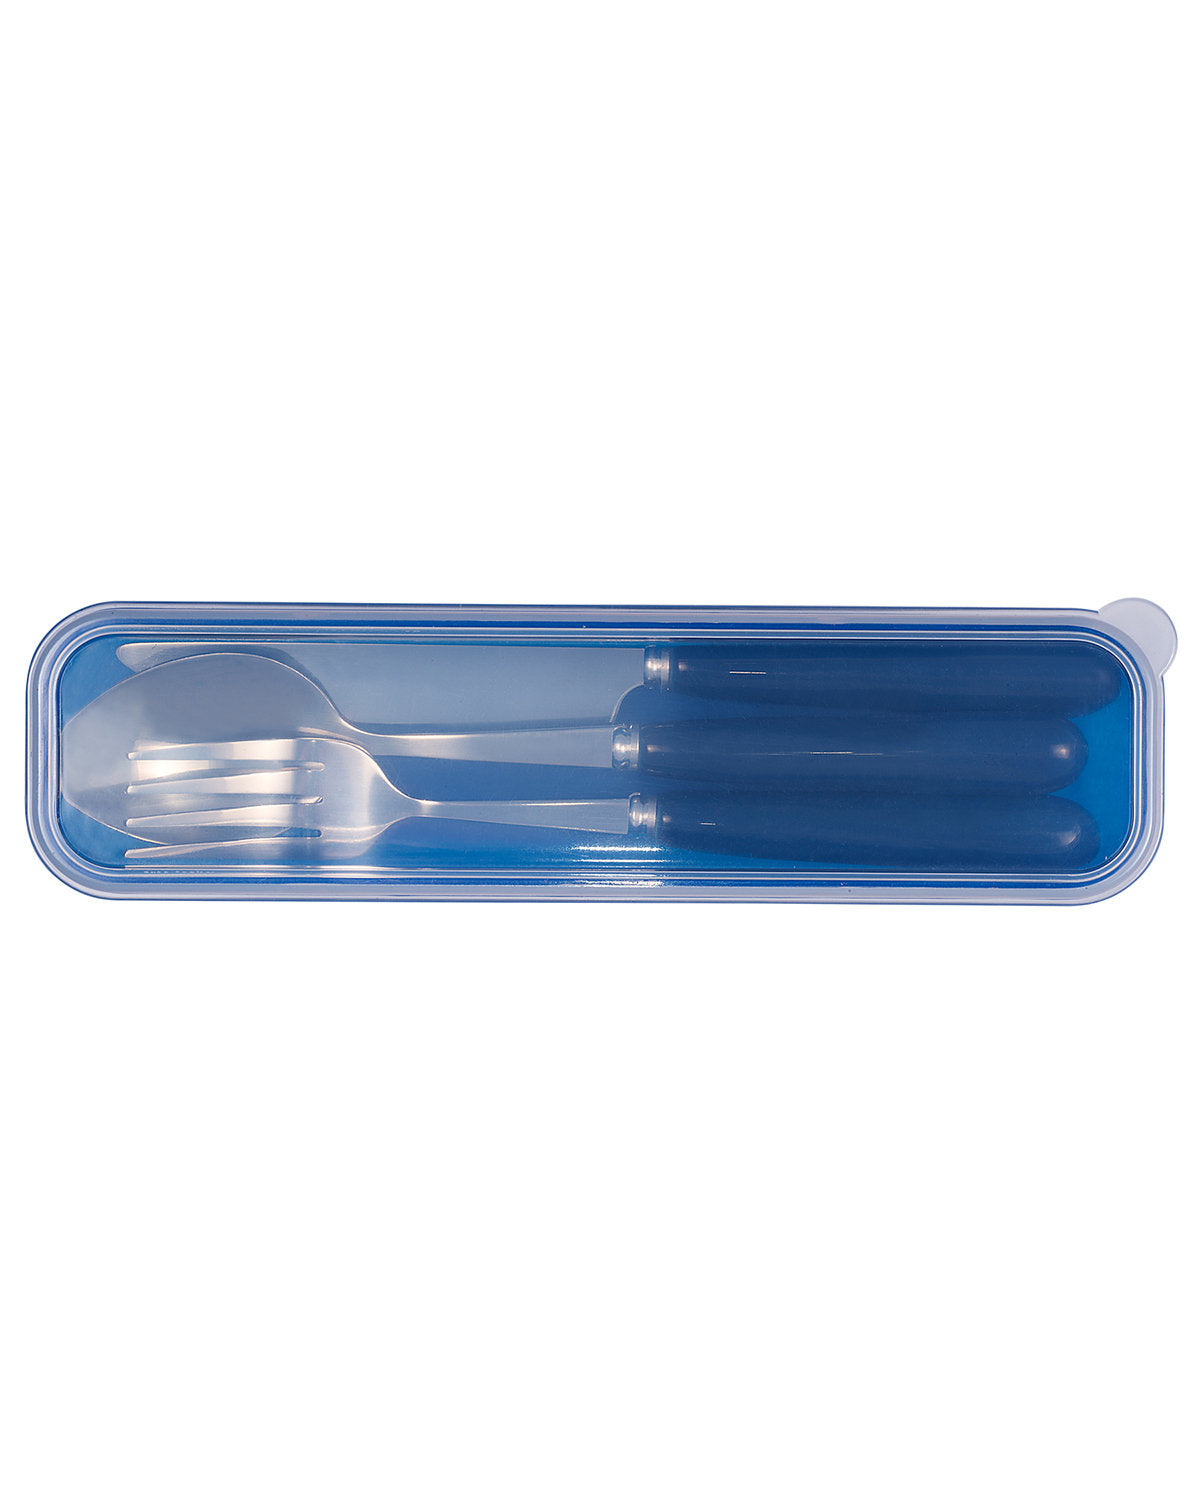 # Cutlery Set In Plastic Case